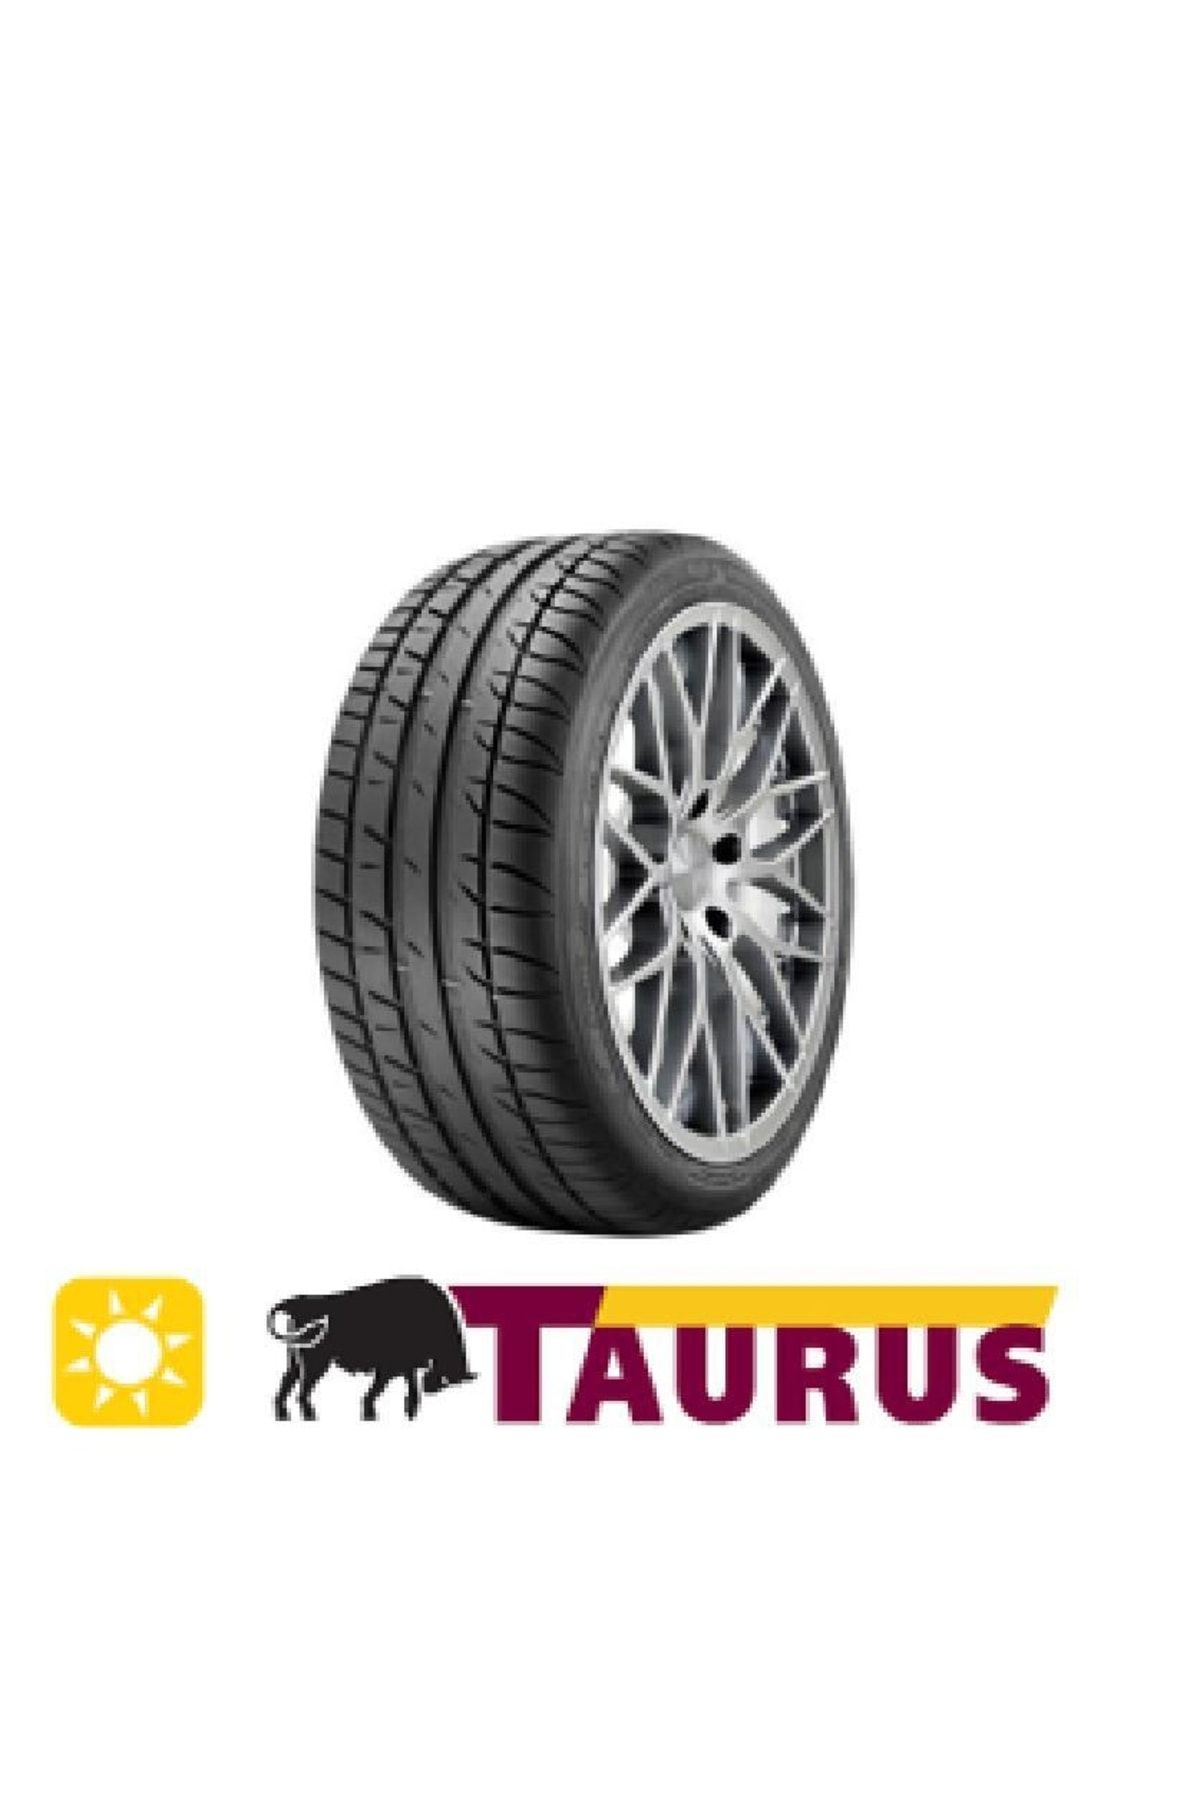 Taurus 195-60r15 88h High Performance